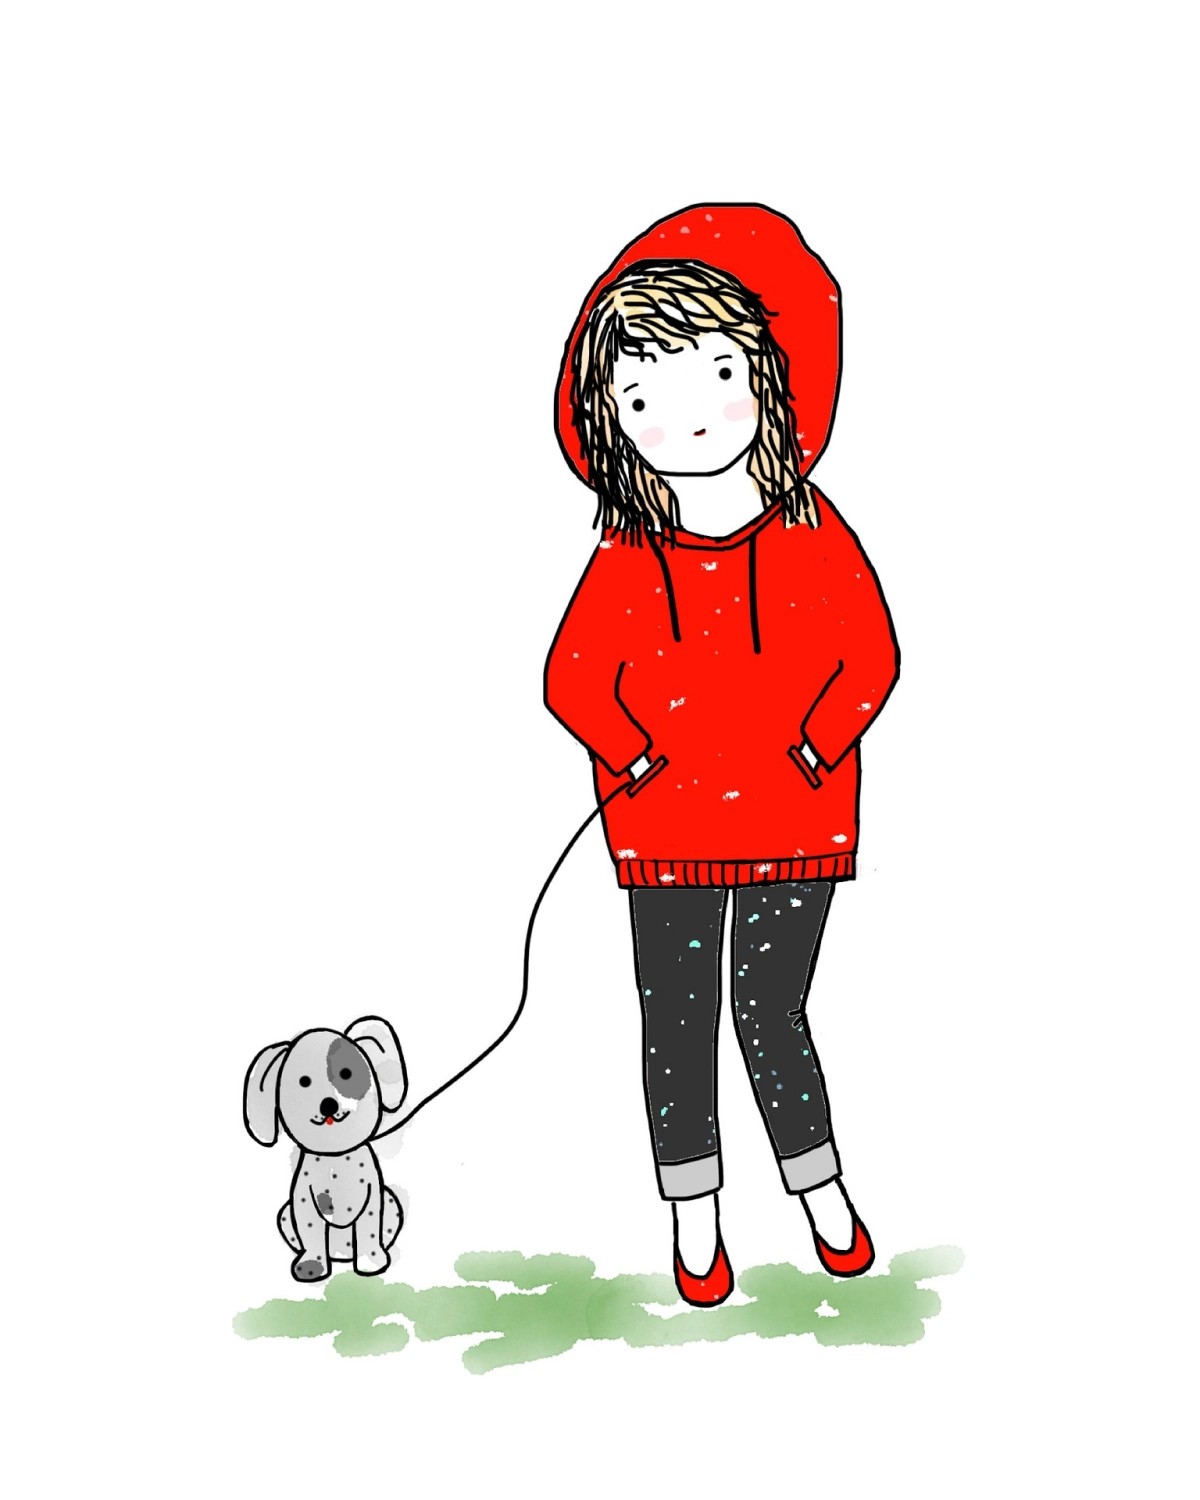 fille sweatshirt rouge promenade chien gazon vert chaussures rouges